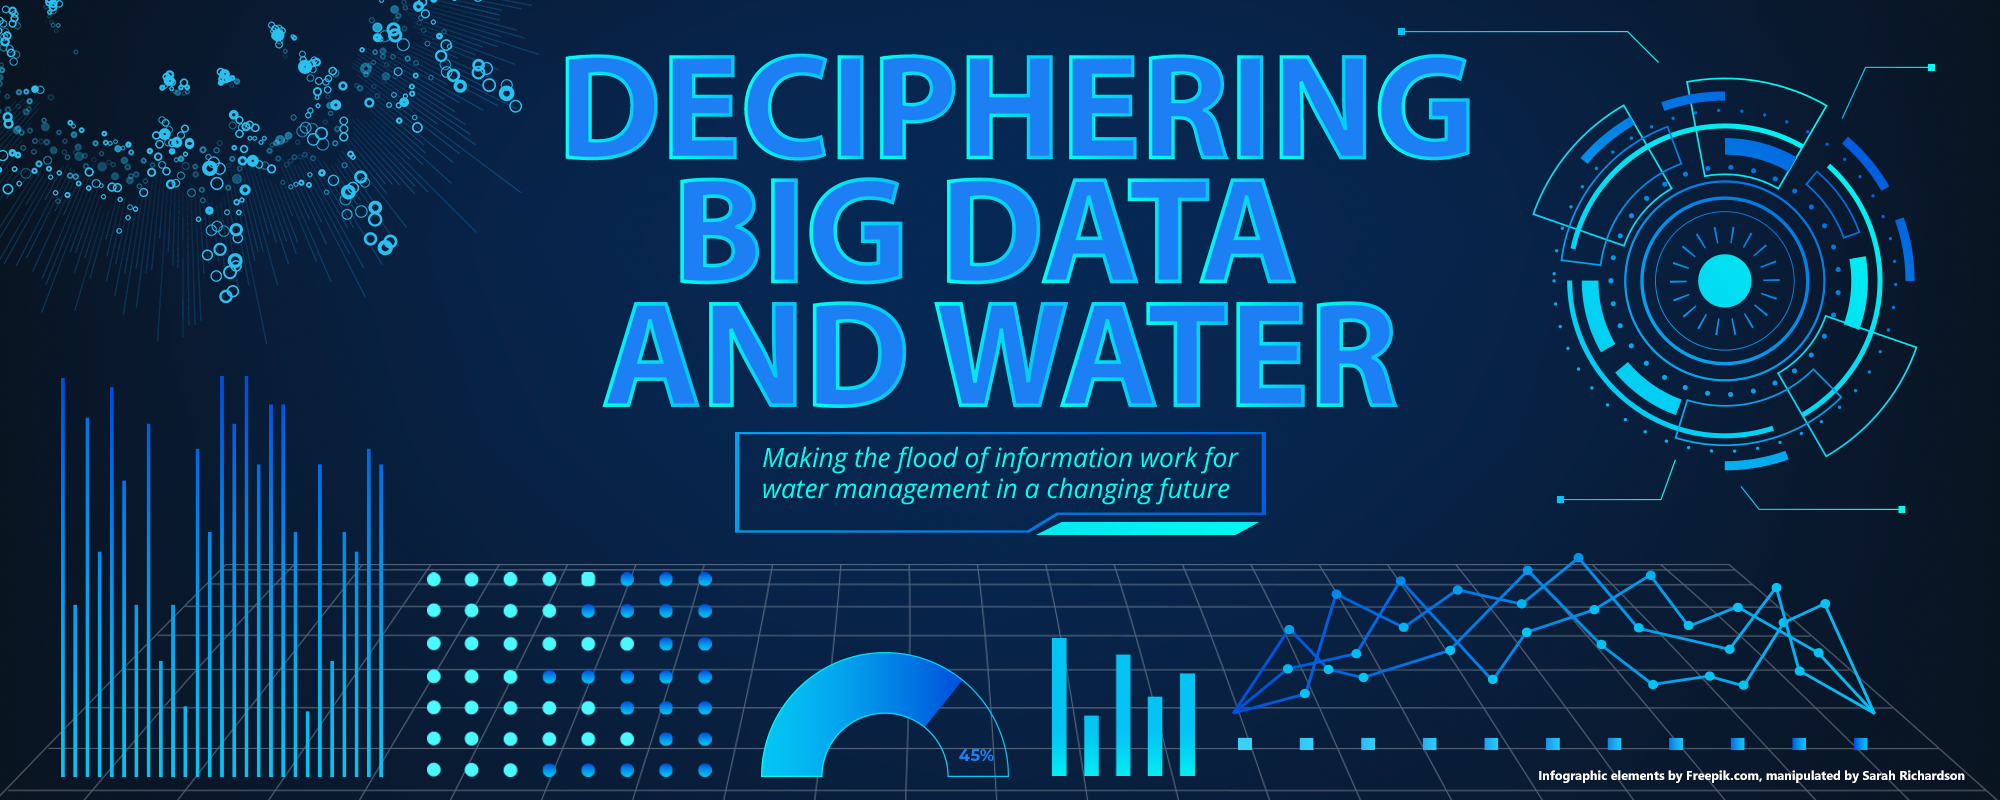 Deciphering Big Data in Water